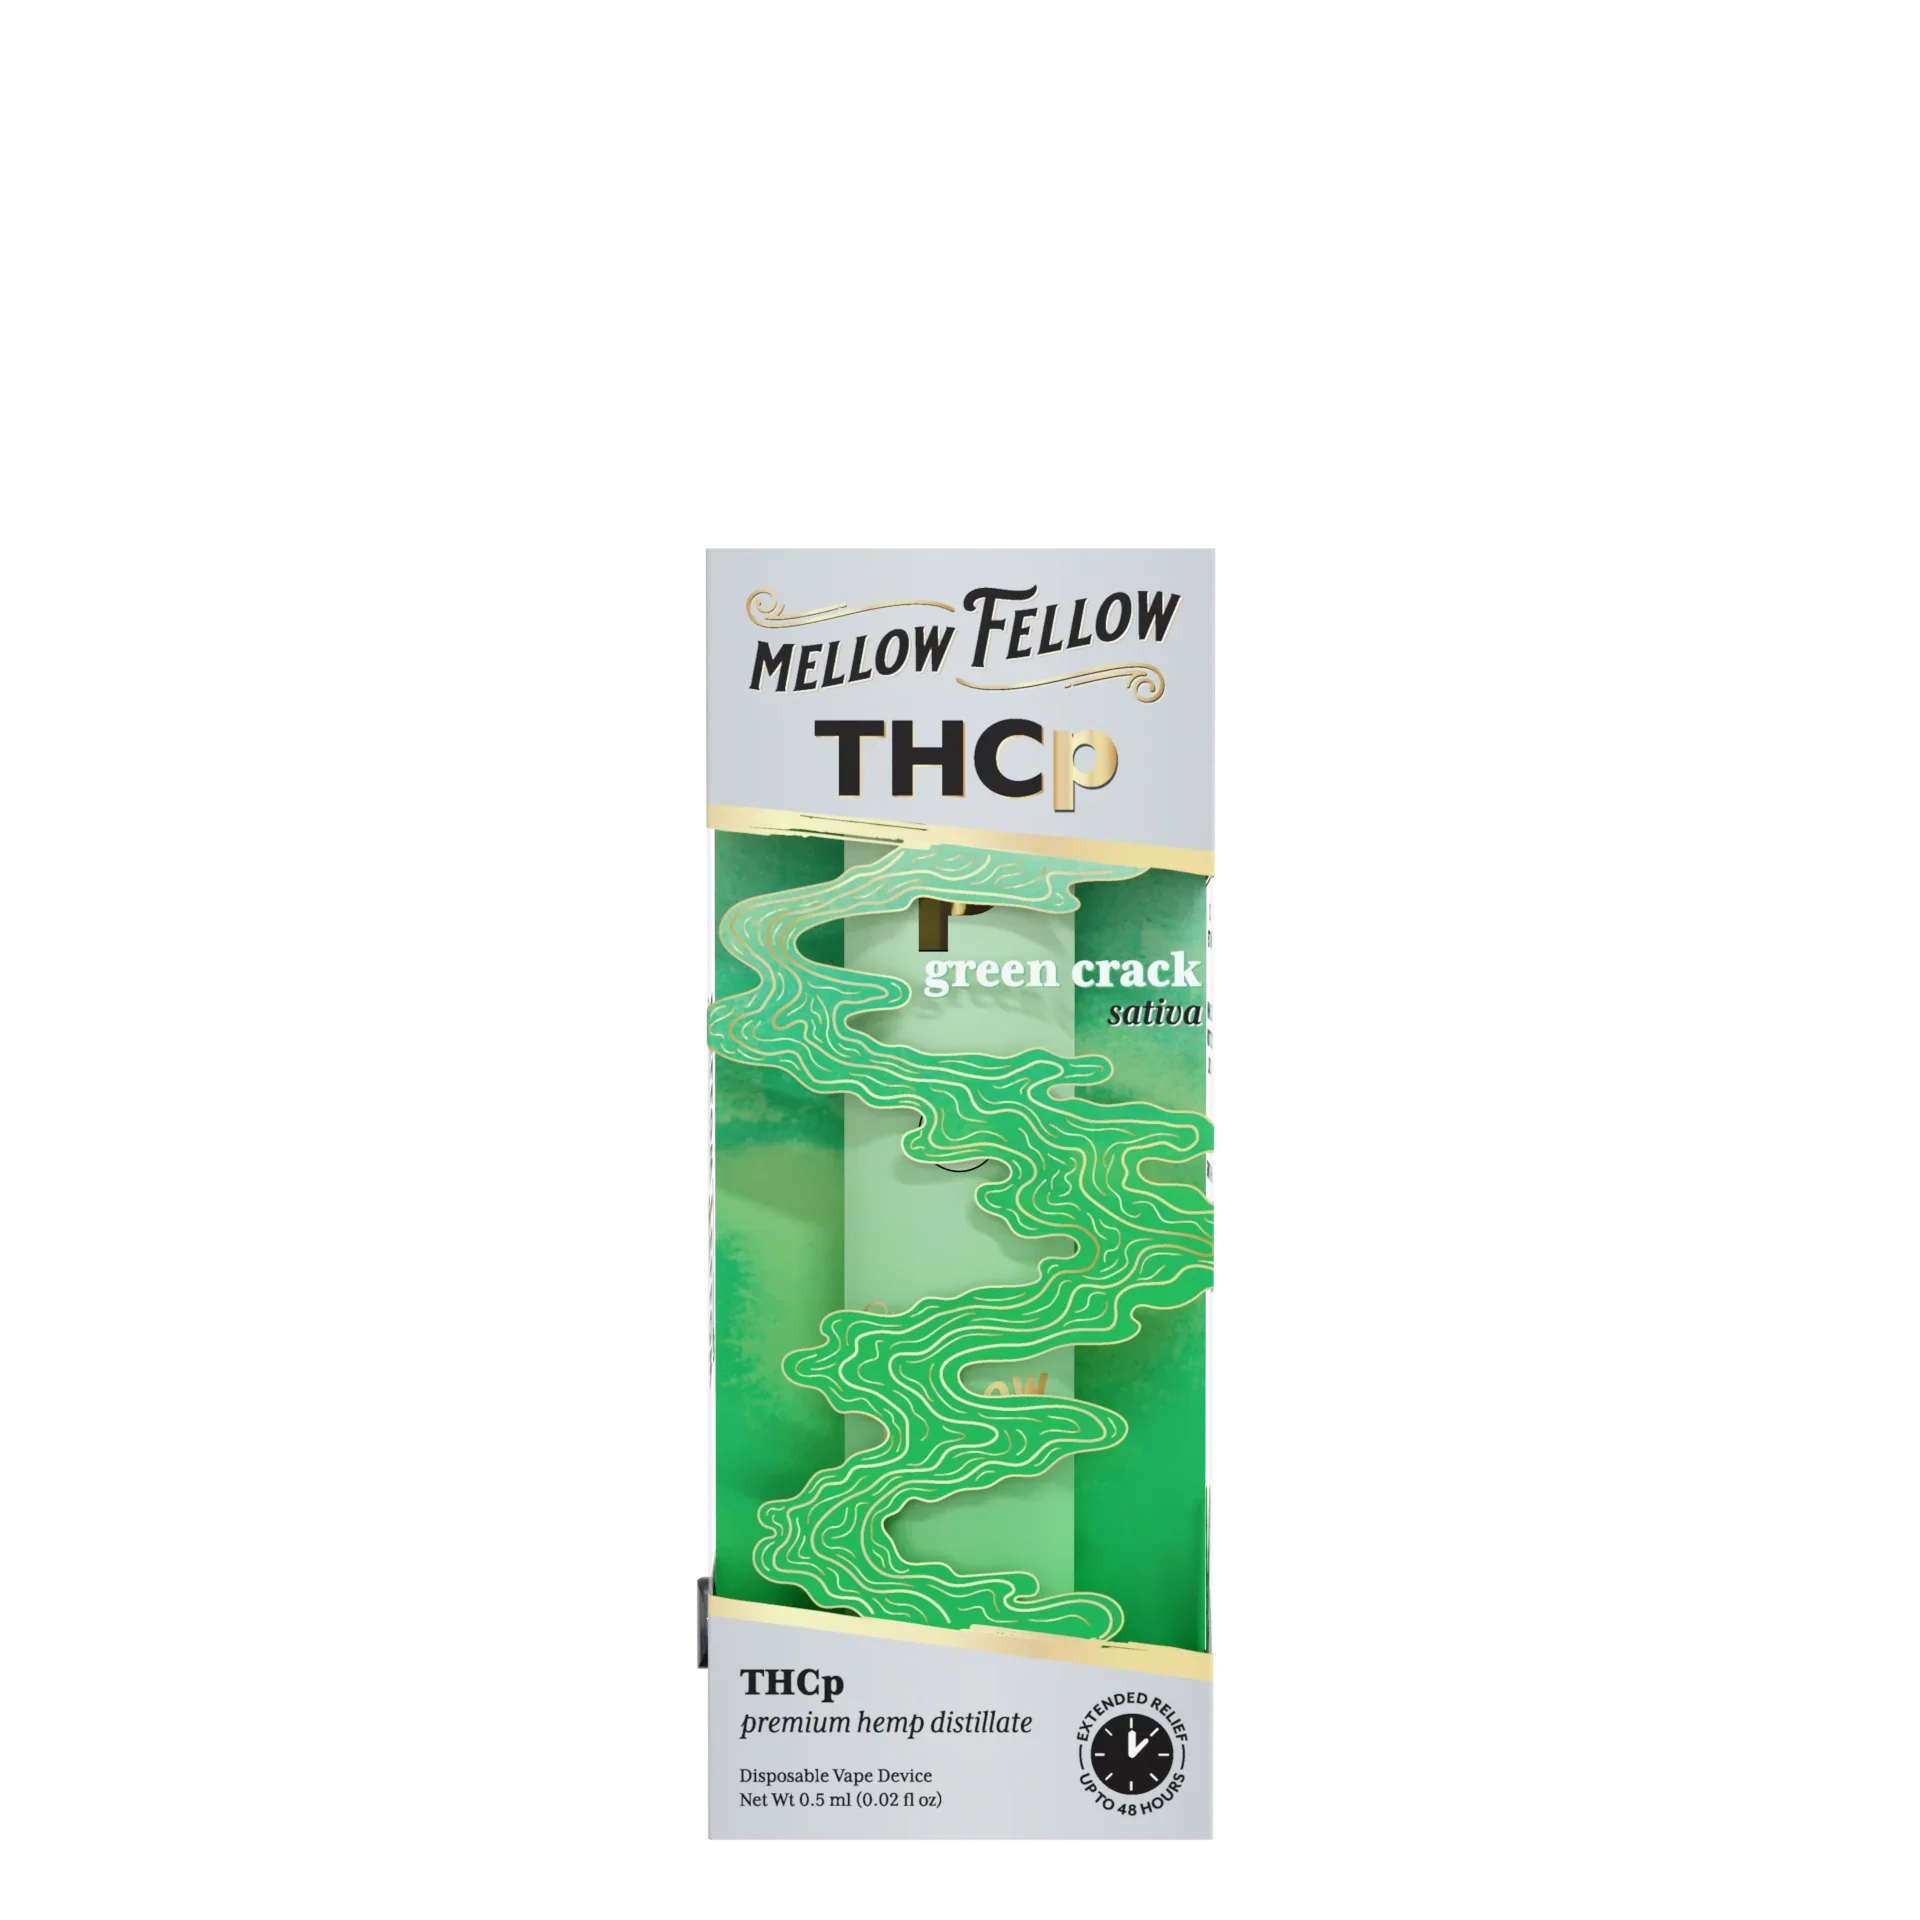 Mellow Fellow THCp 0.5g Disposable Vape - Green Crack (Sativa) Best Price